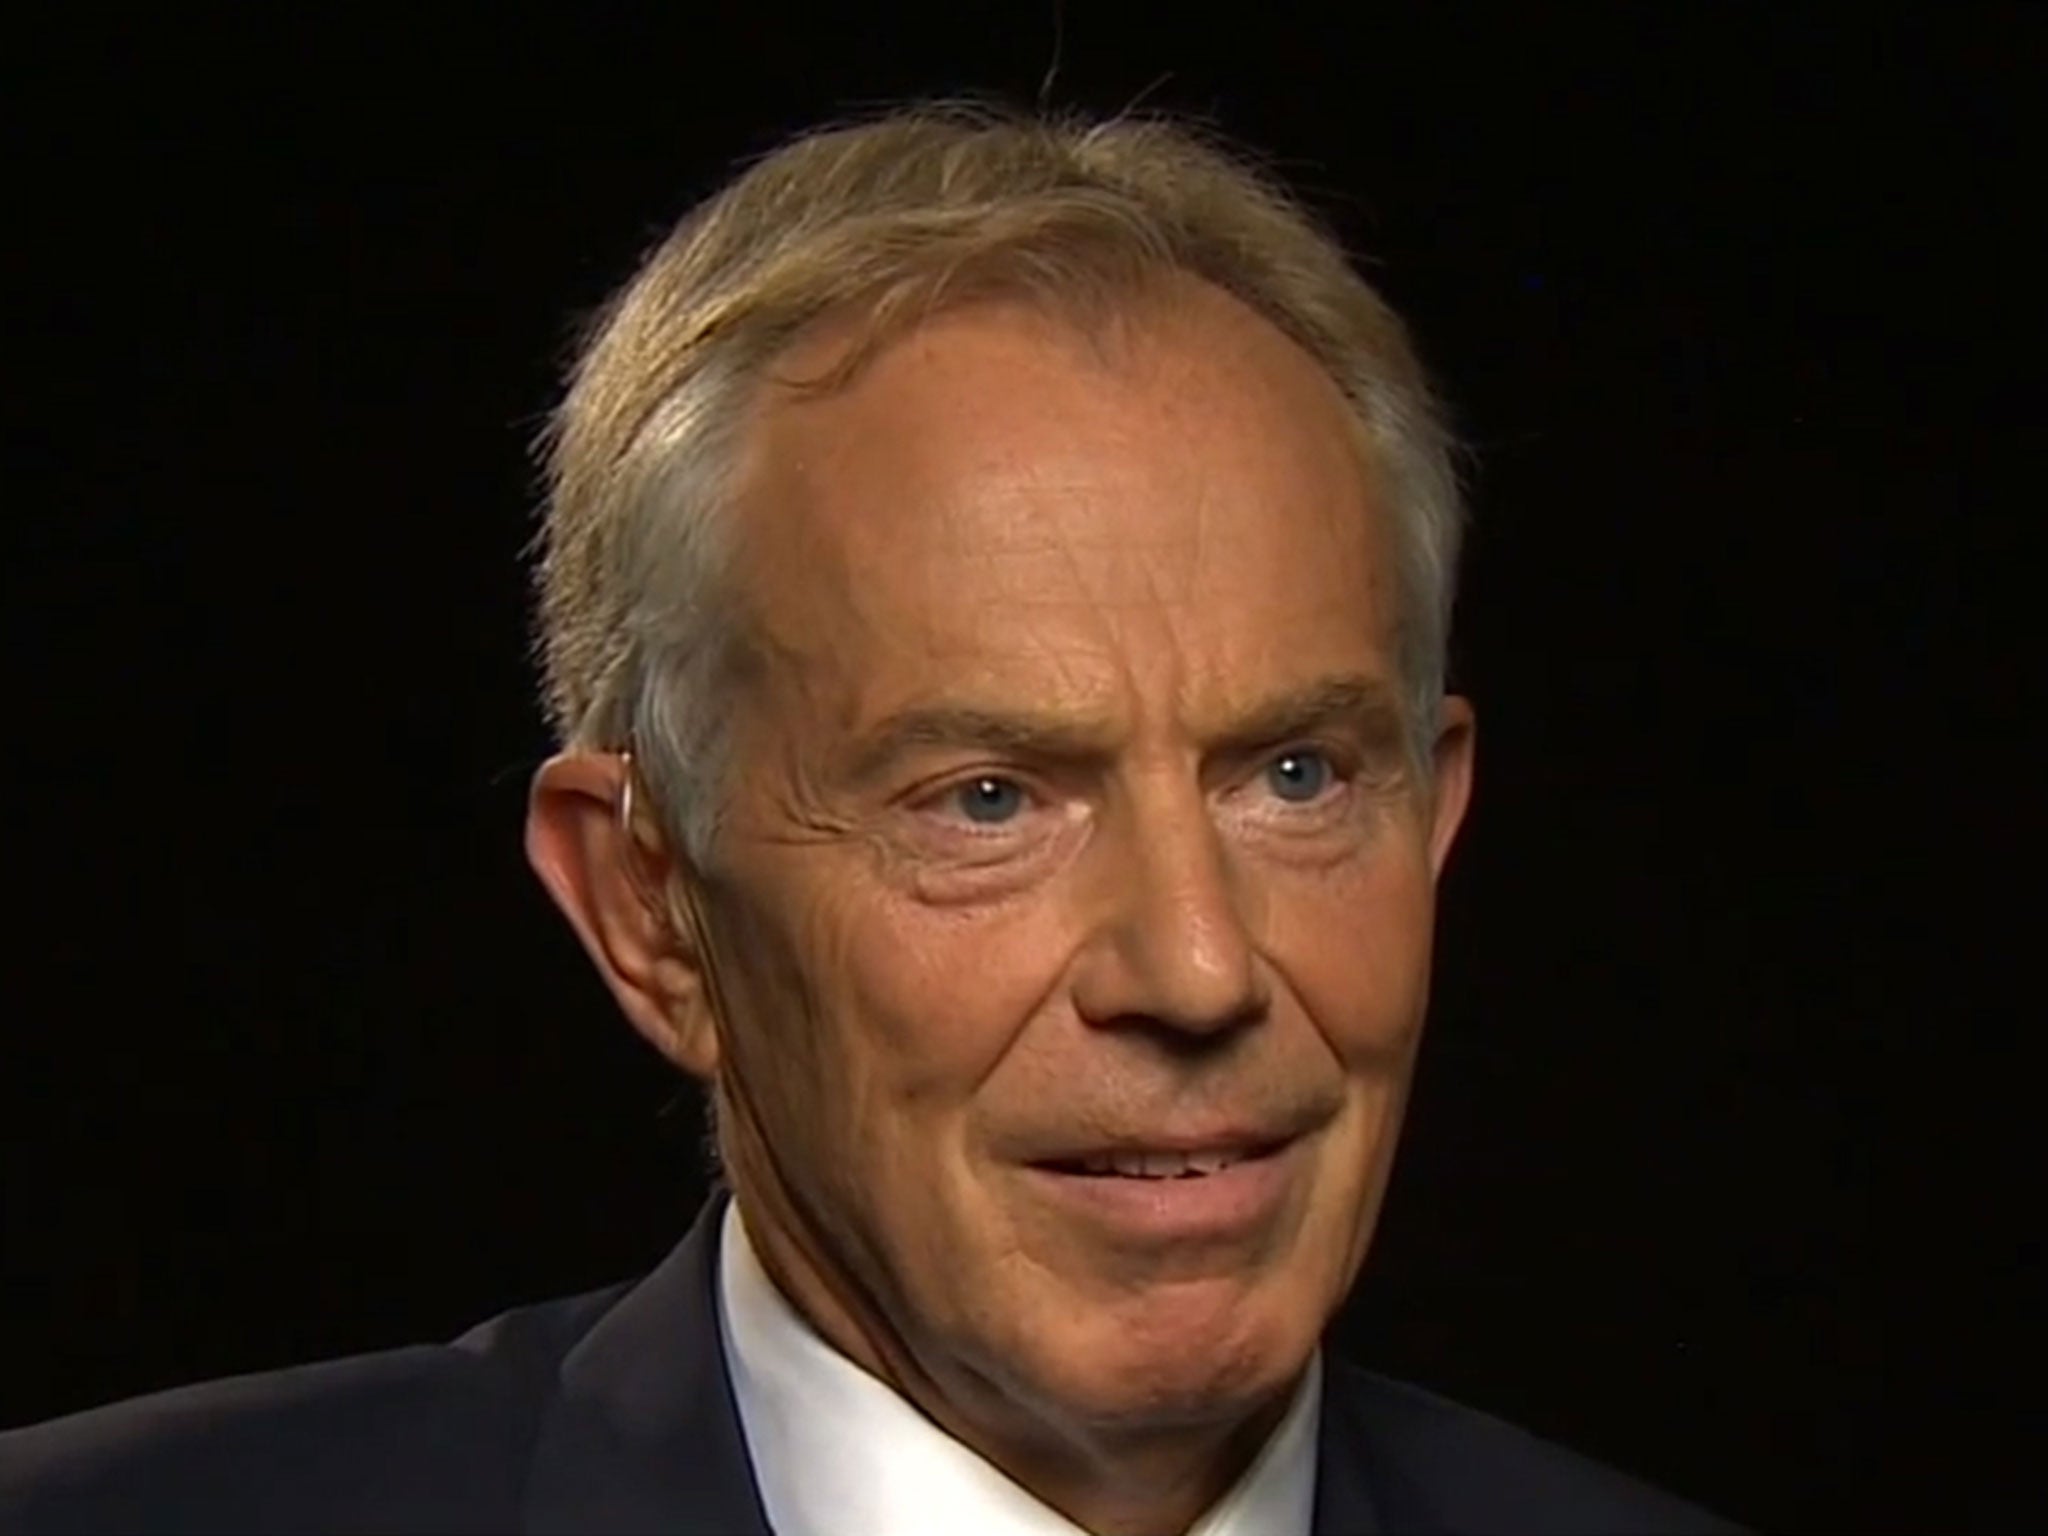 Tony Blair interviewed on CNN